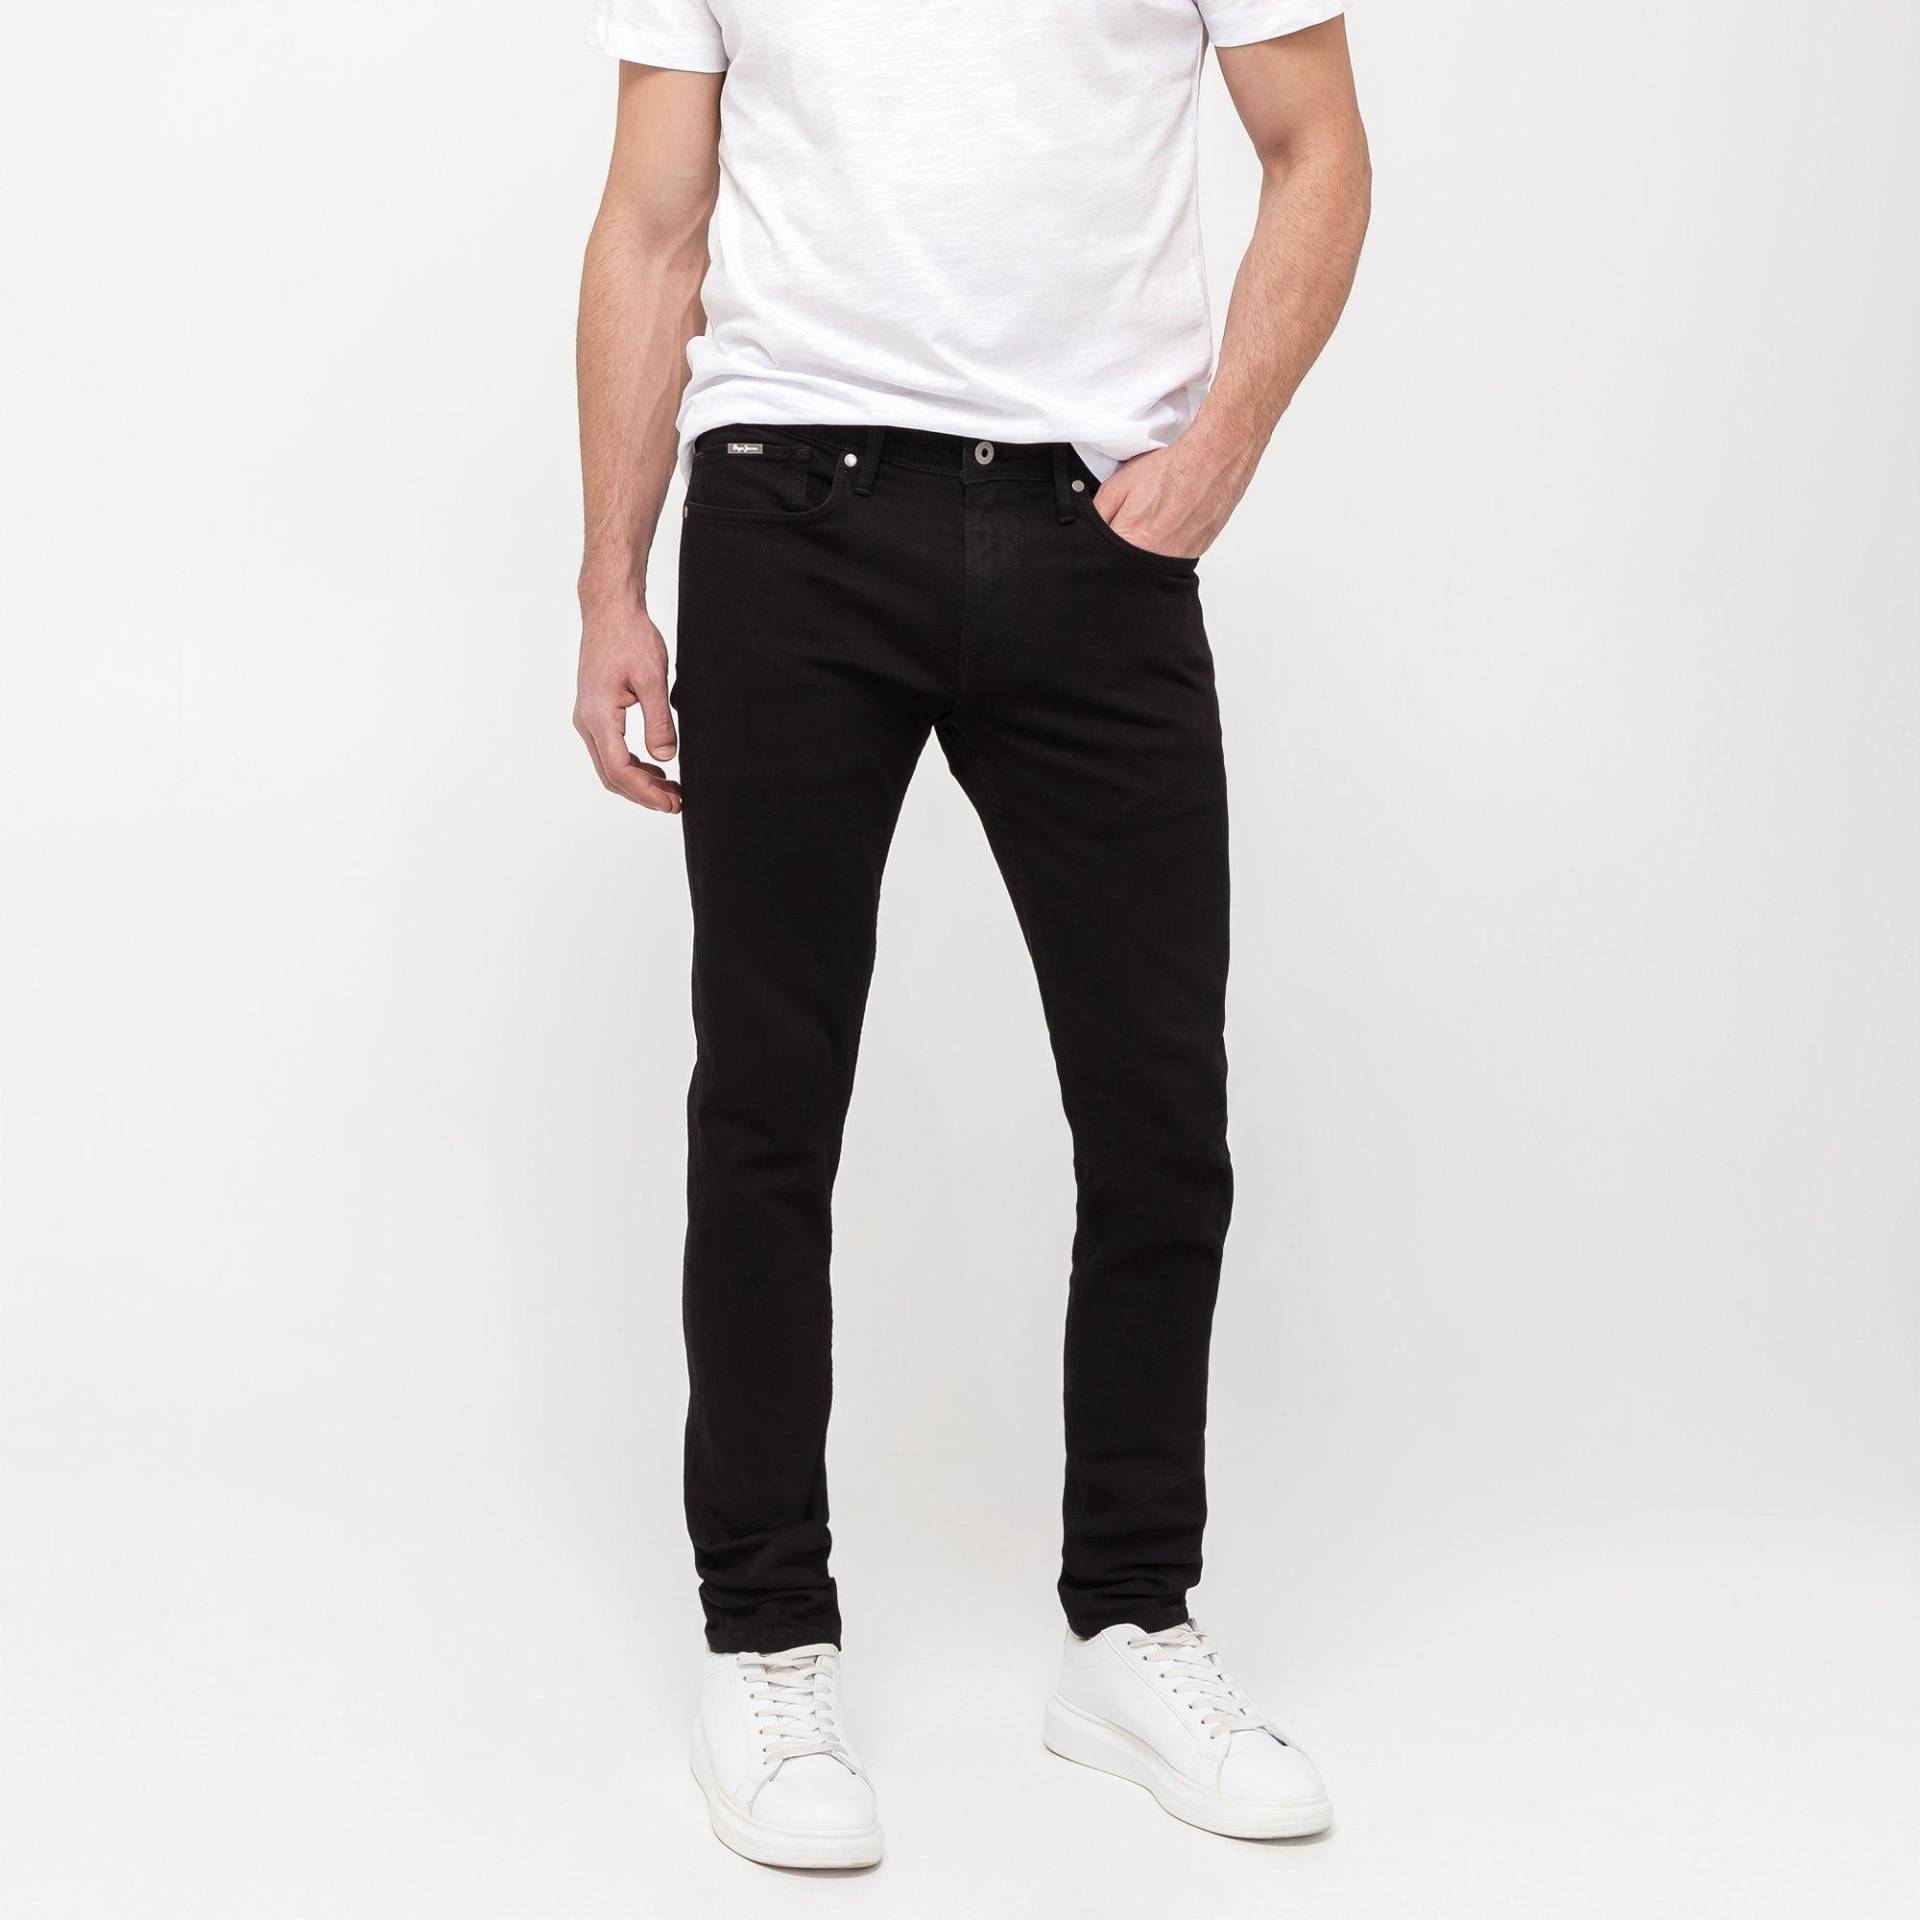 Jeans, Skinny Fit Herren Schwarz L32/W34 von Pepe Jeans